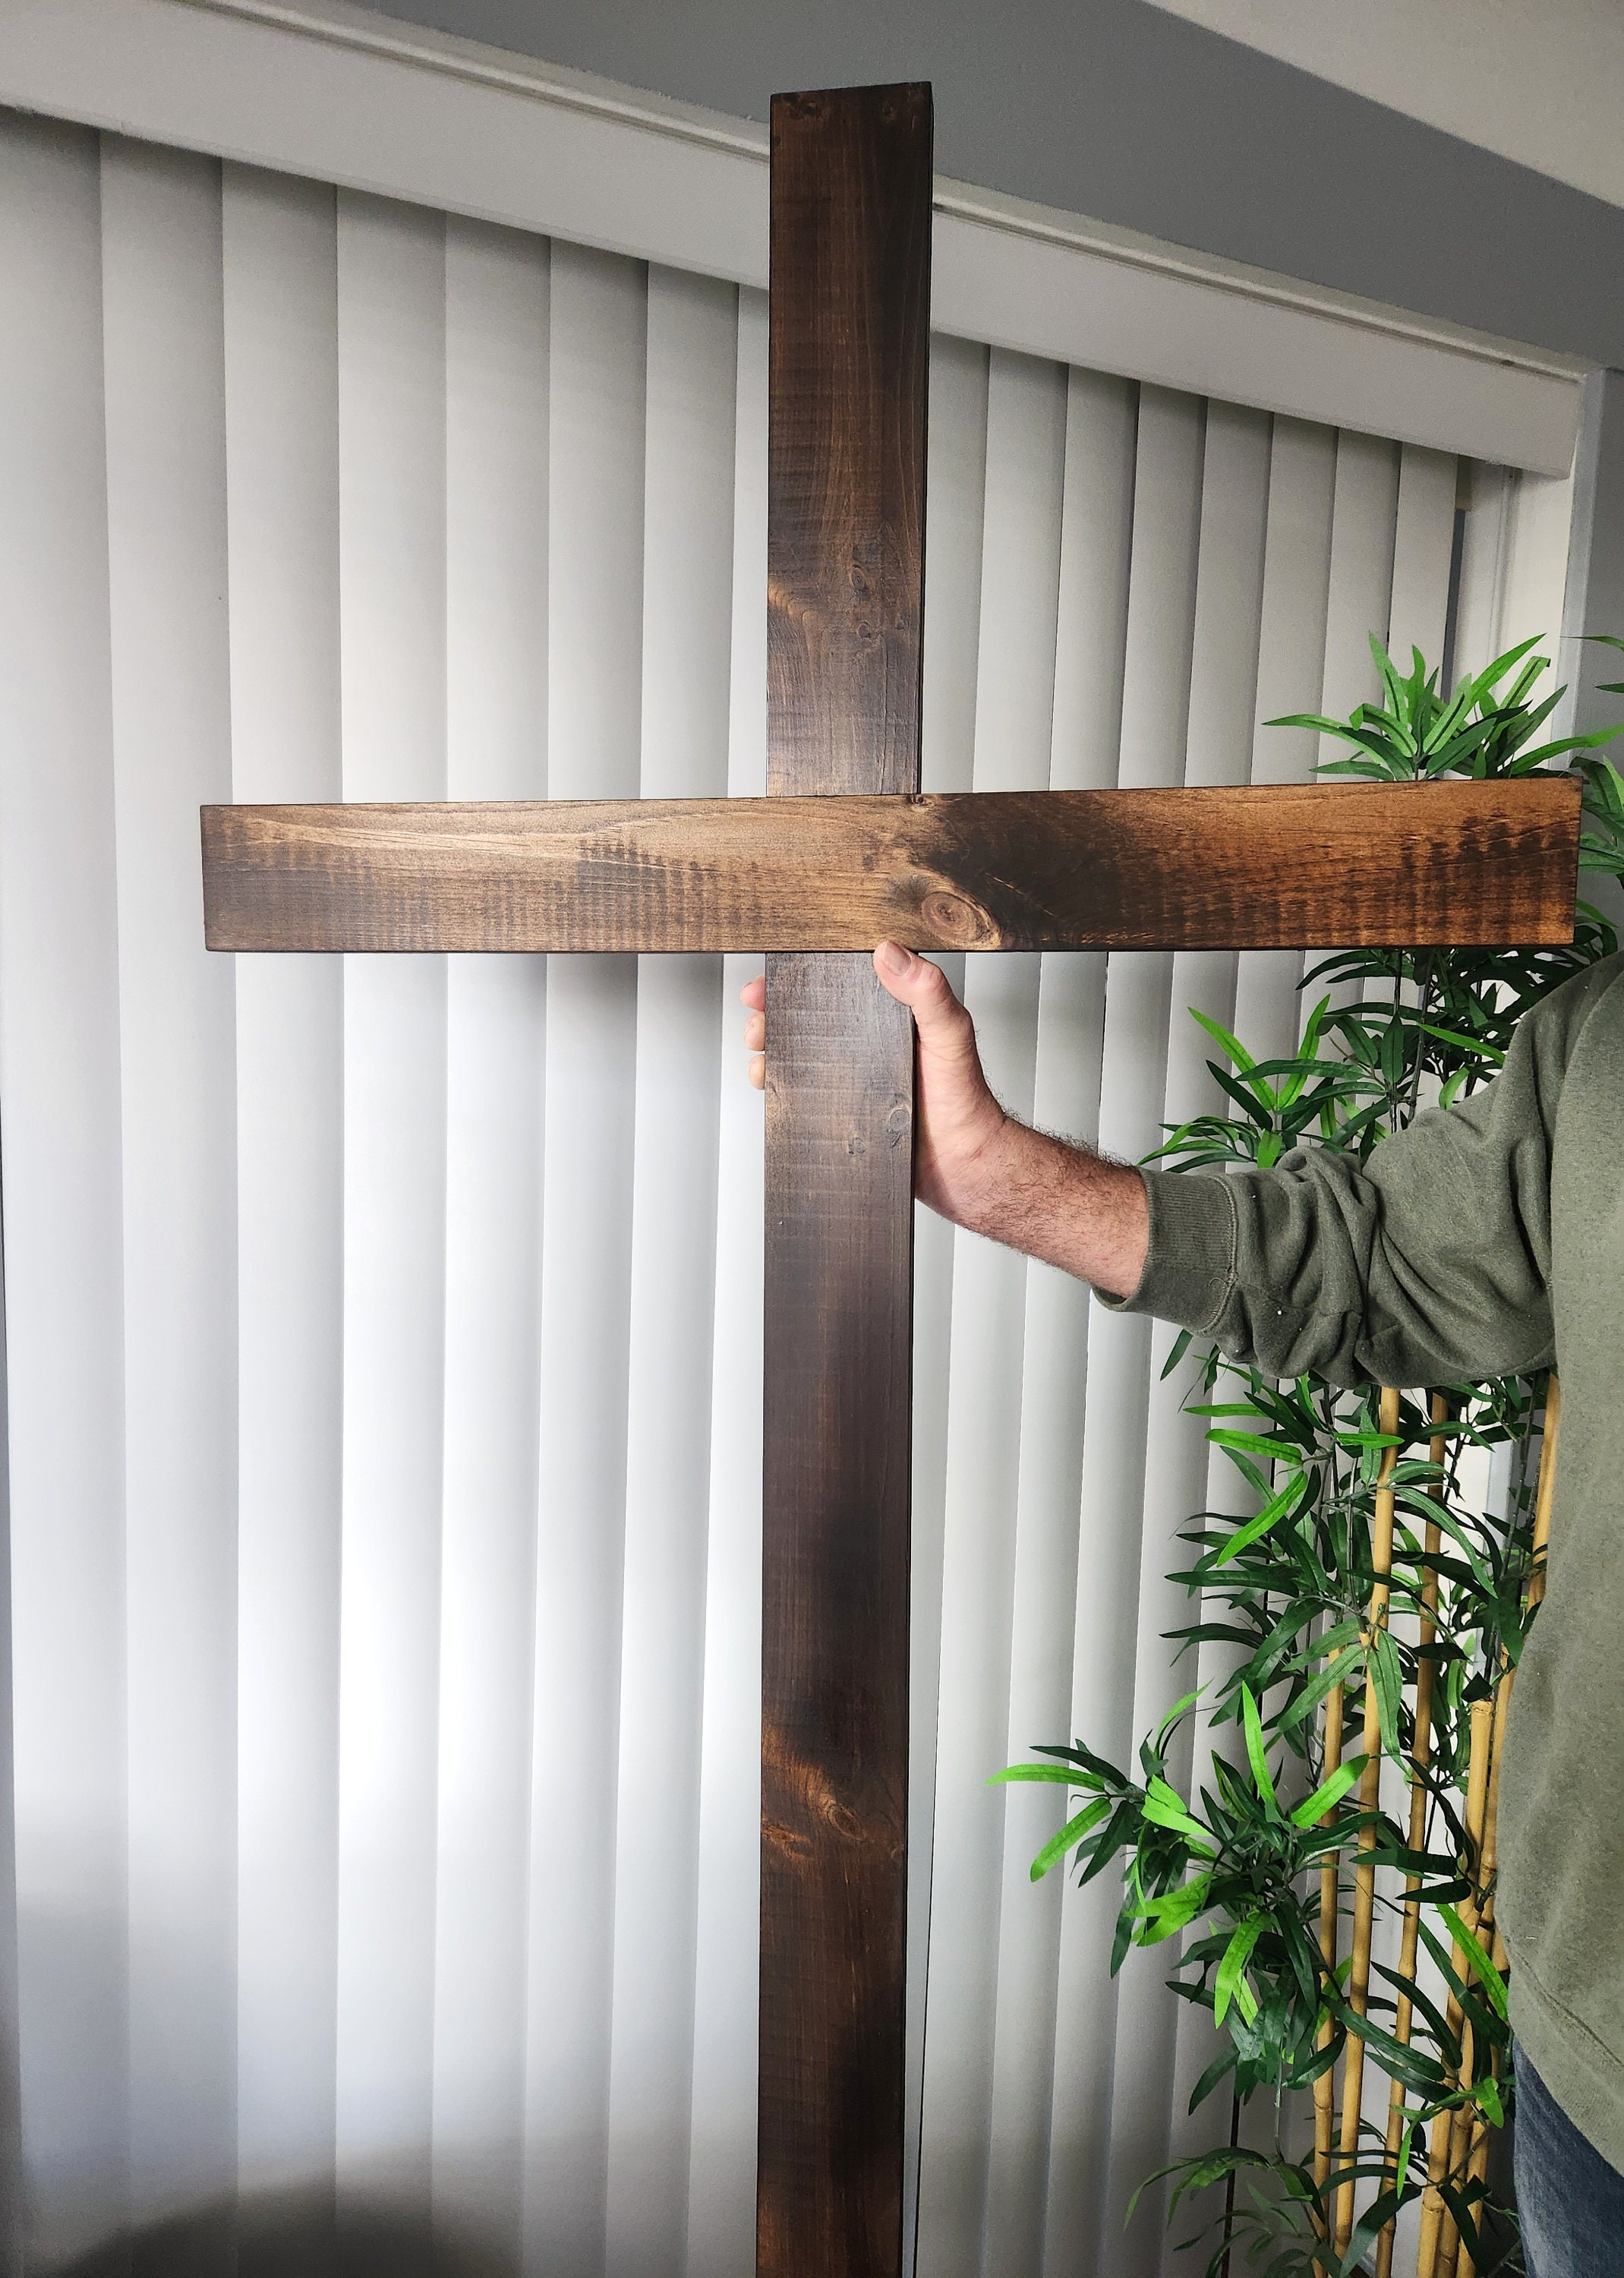 Hanging Wooden Cross for church, chapel, school. Catholic, Christian